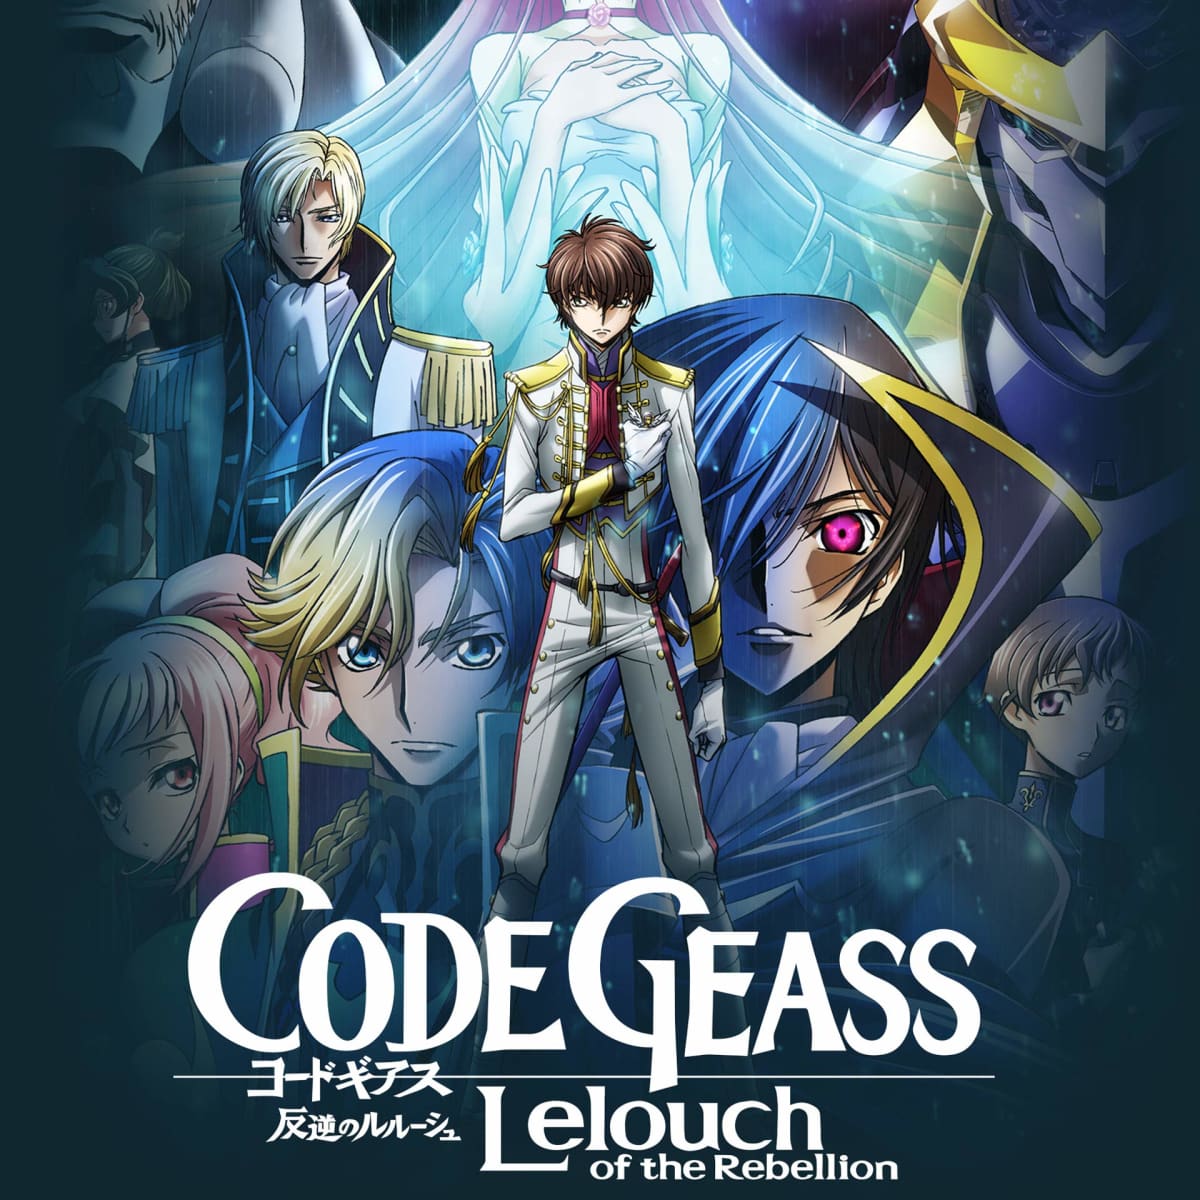 Anime Code Geass c.c. Lelouch Lamperouge HD Print Wall Scroll